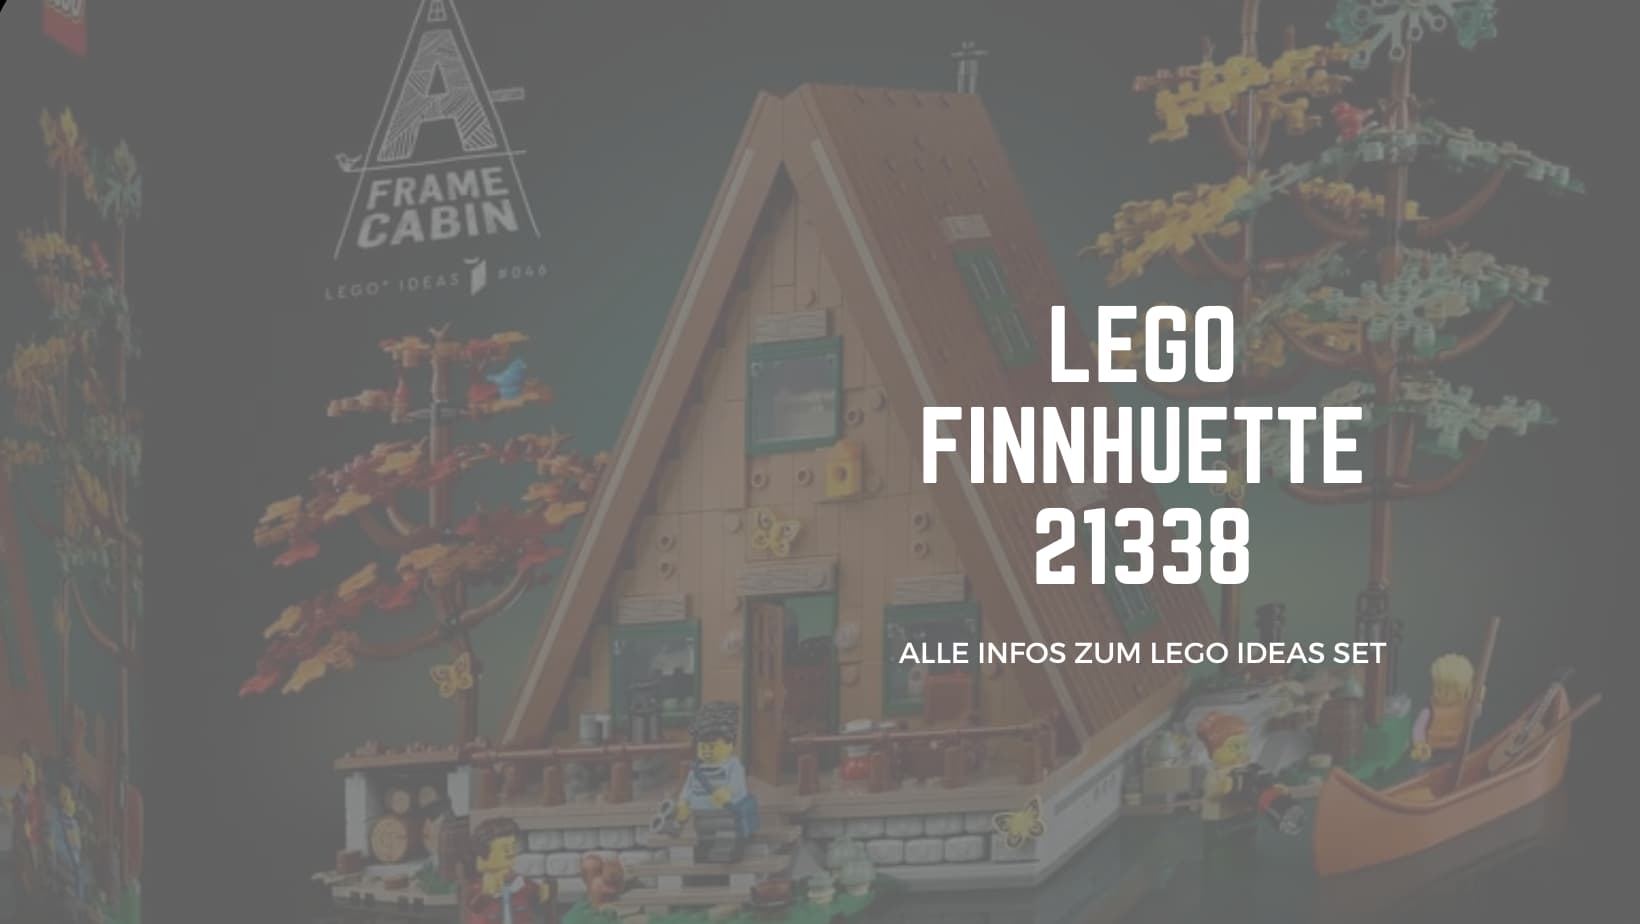 LEGO Finnhütte 21338